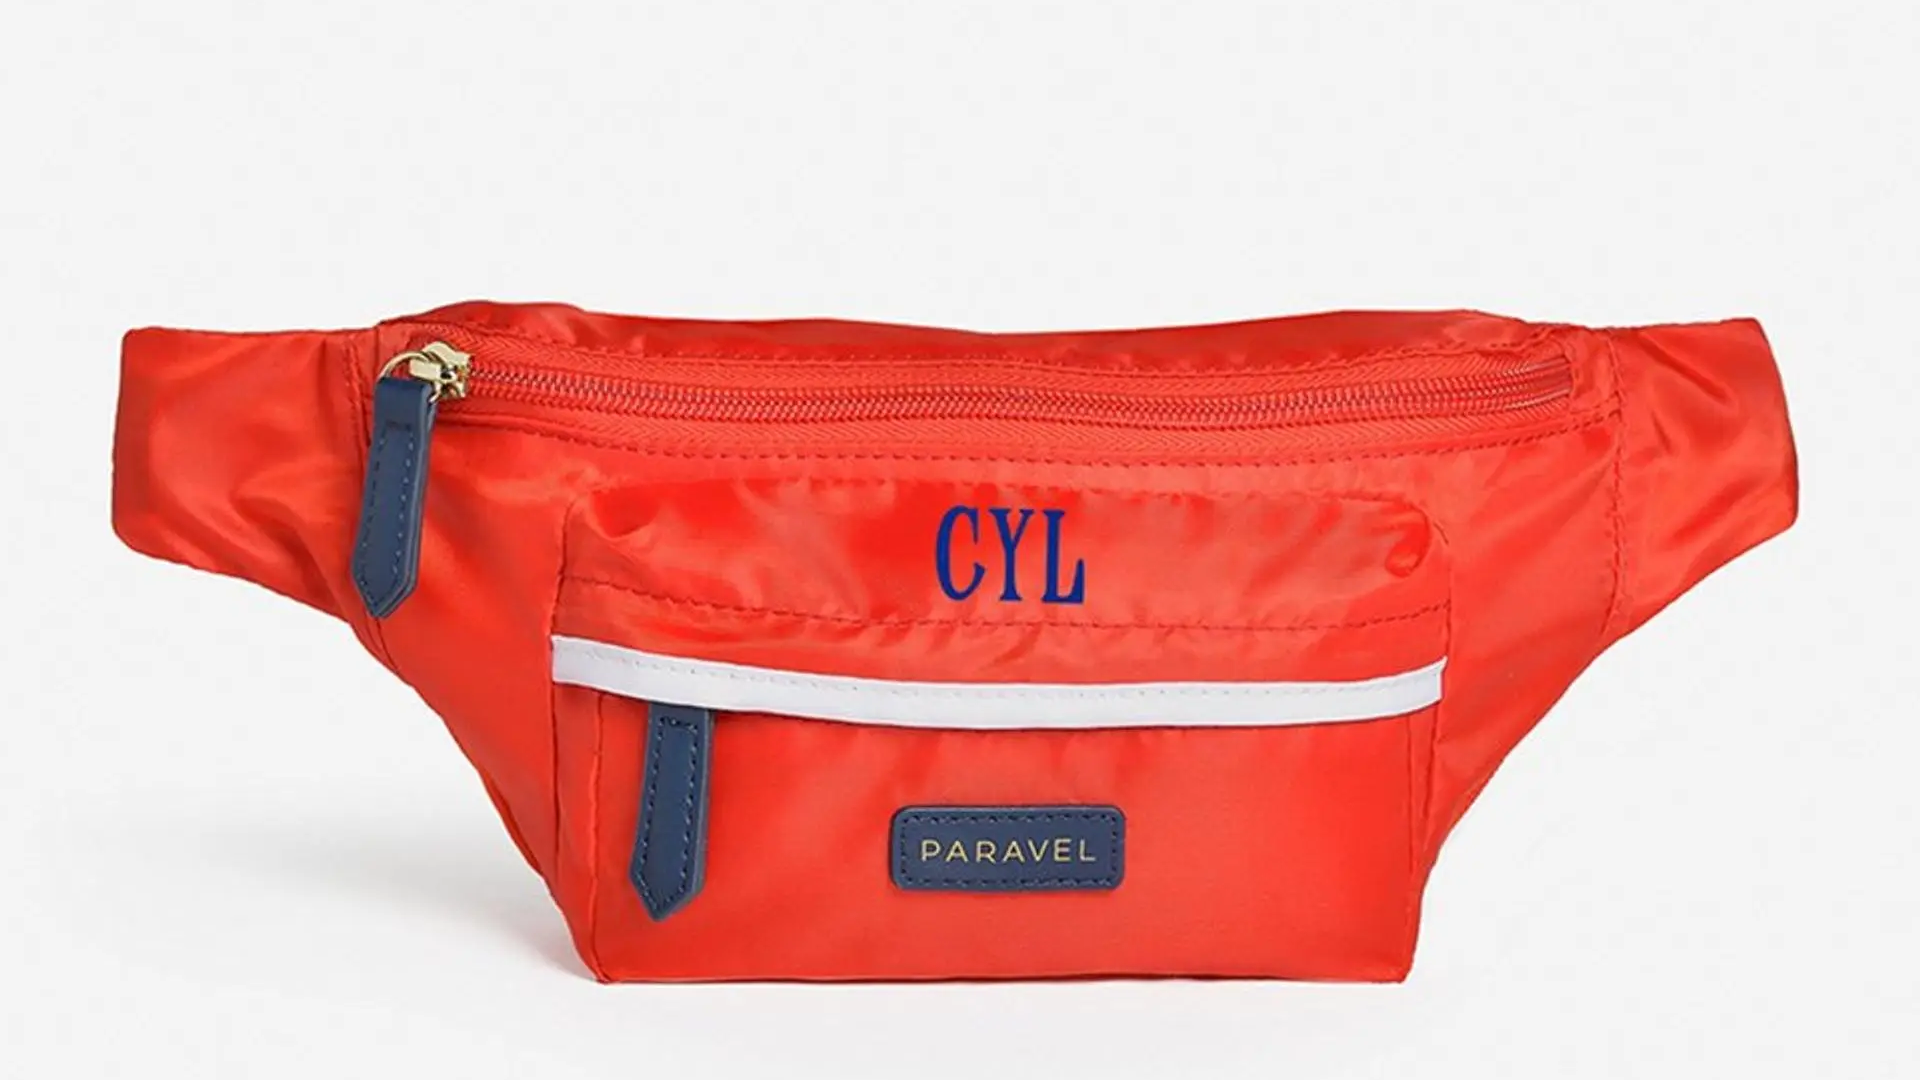 A fold-up belt bag